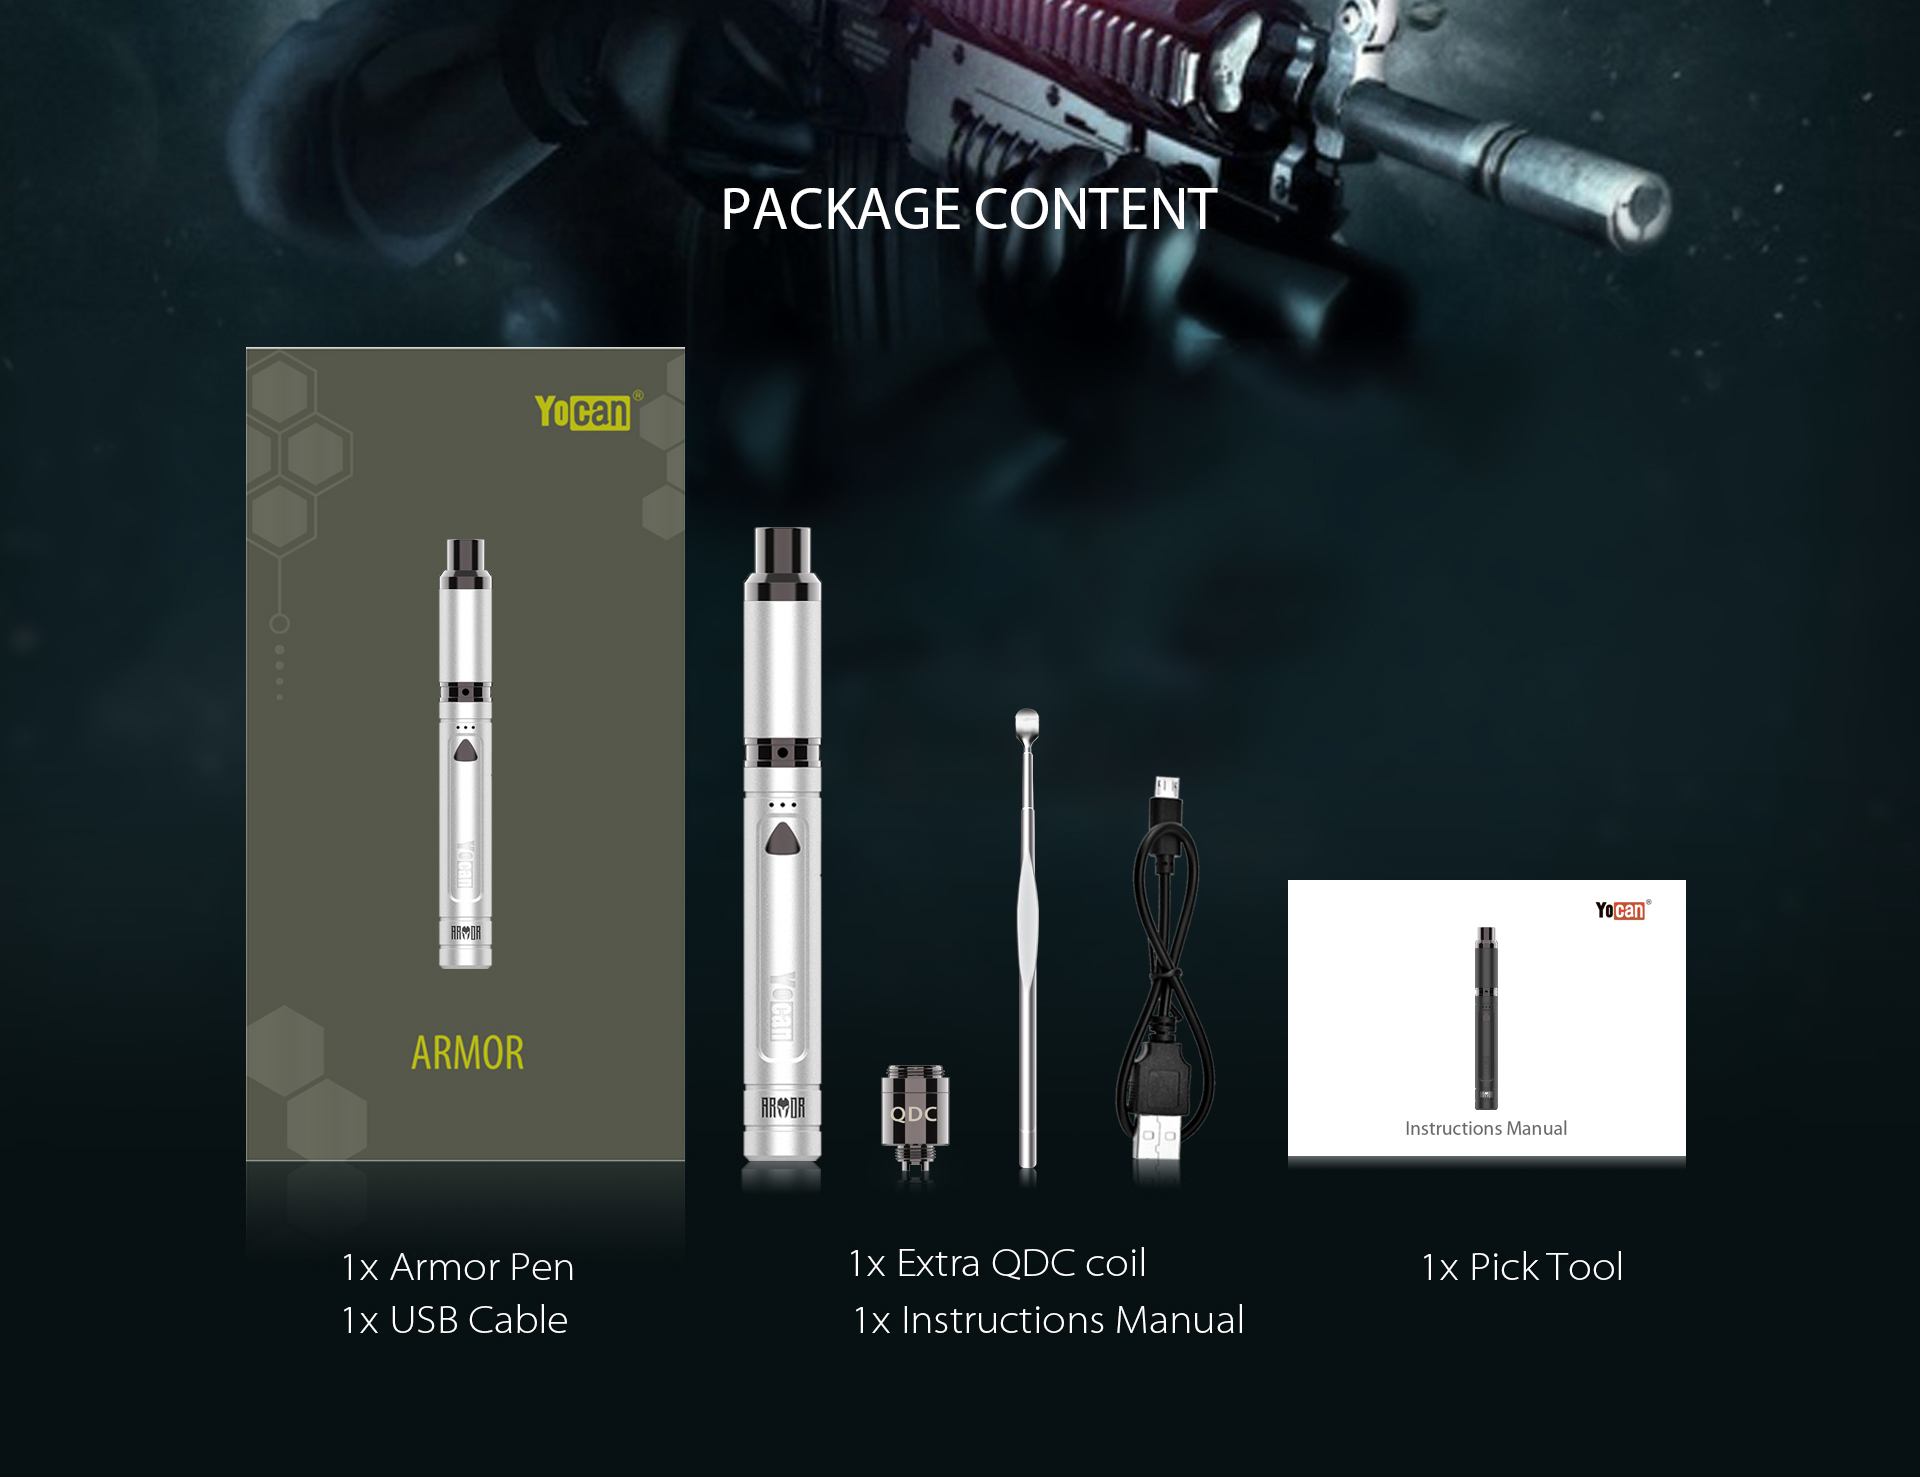 Yocan Armor Vaporizer pen package content.